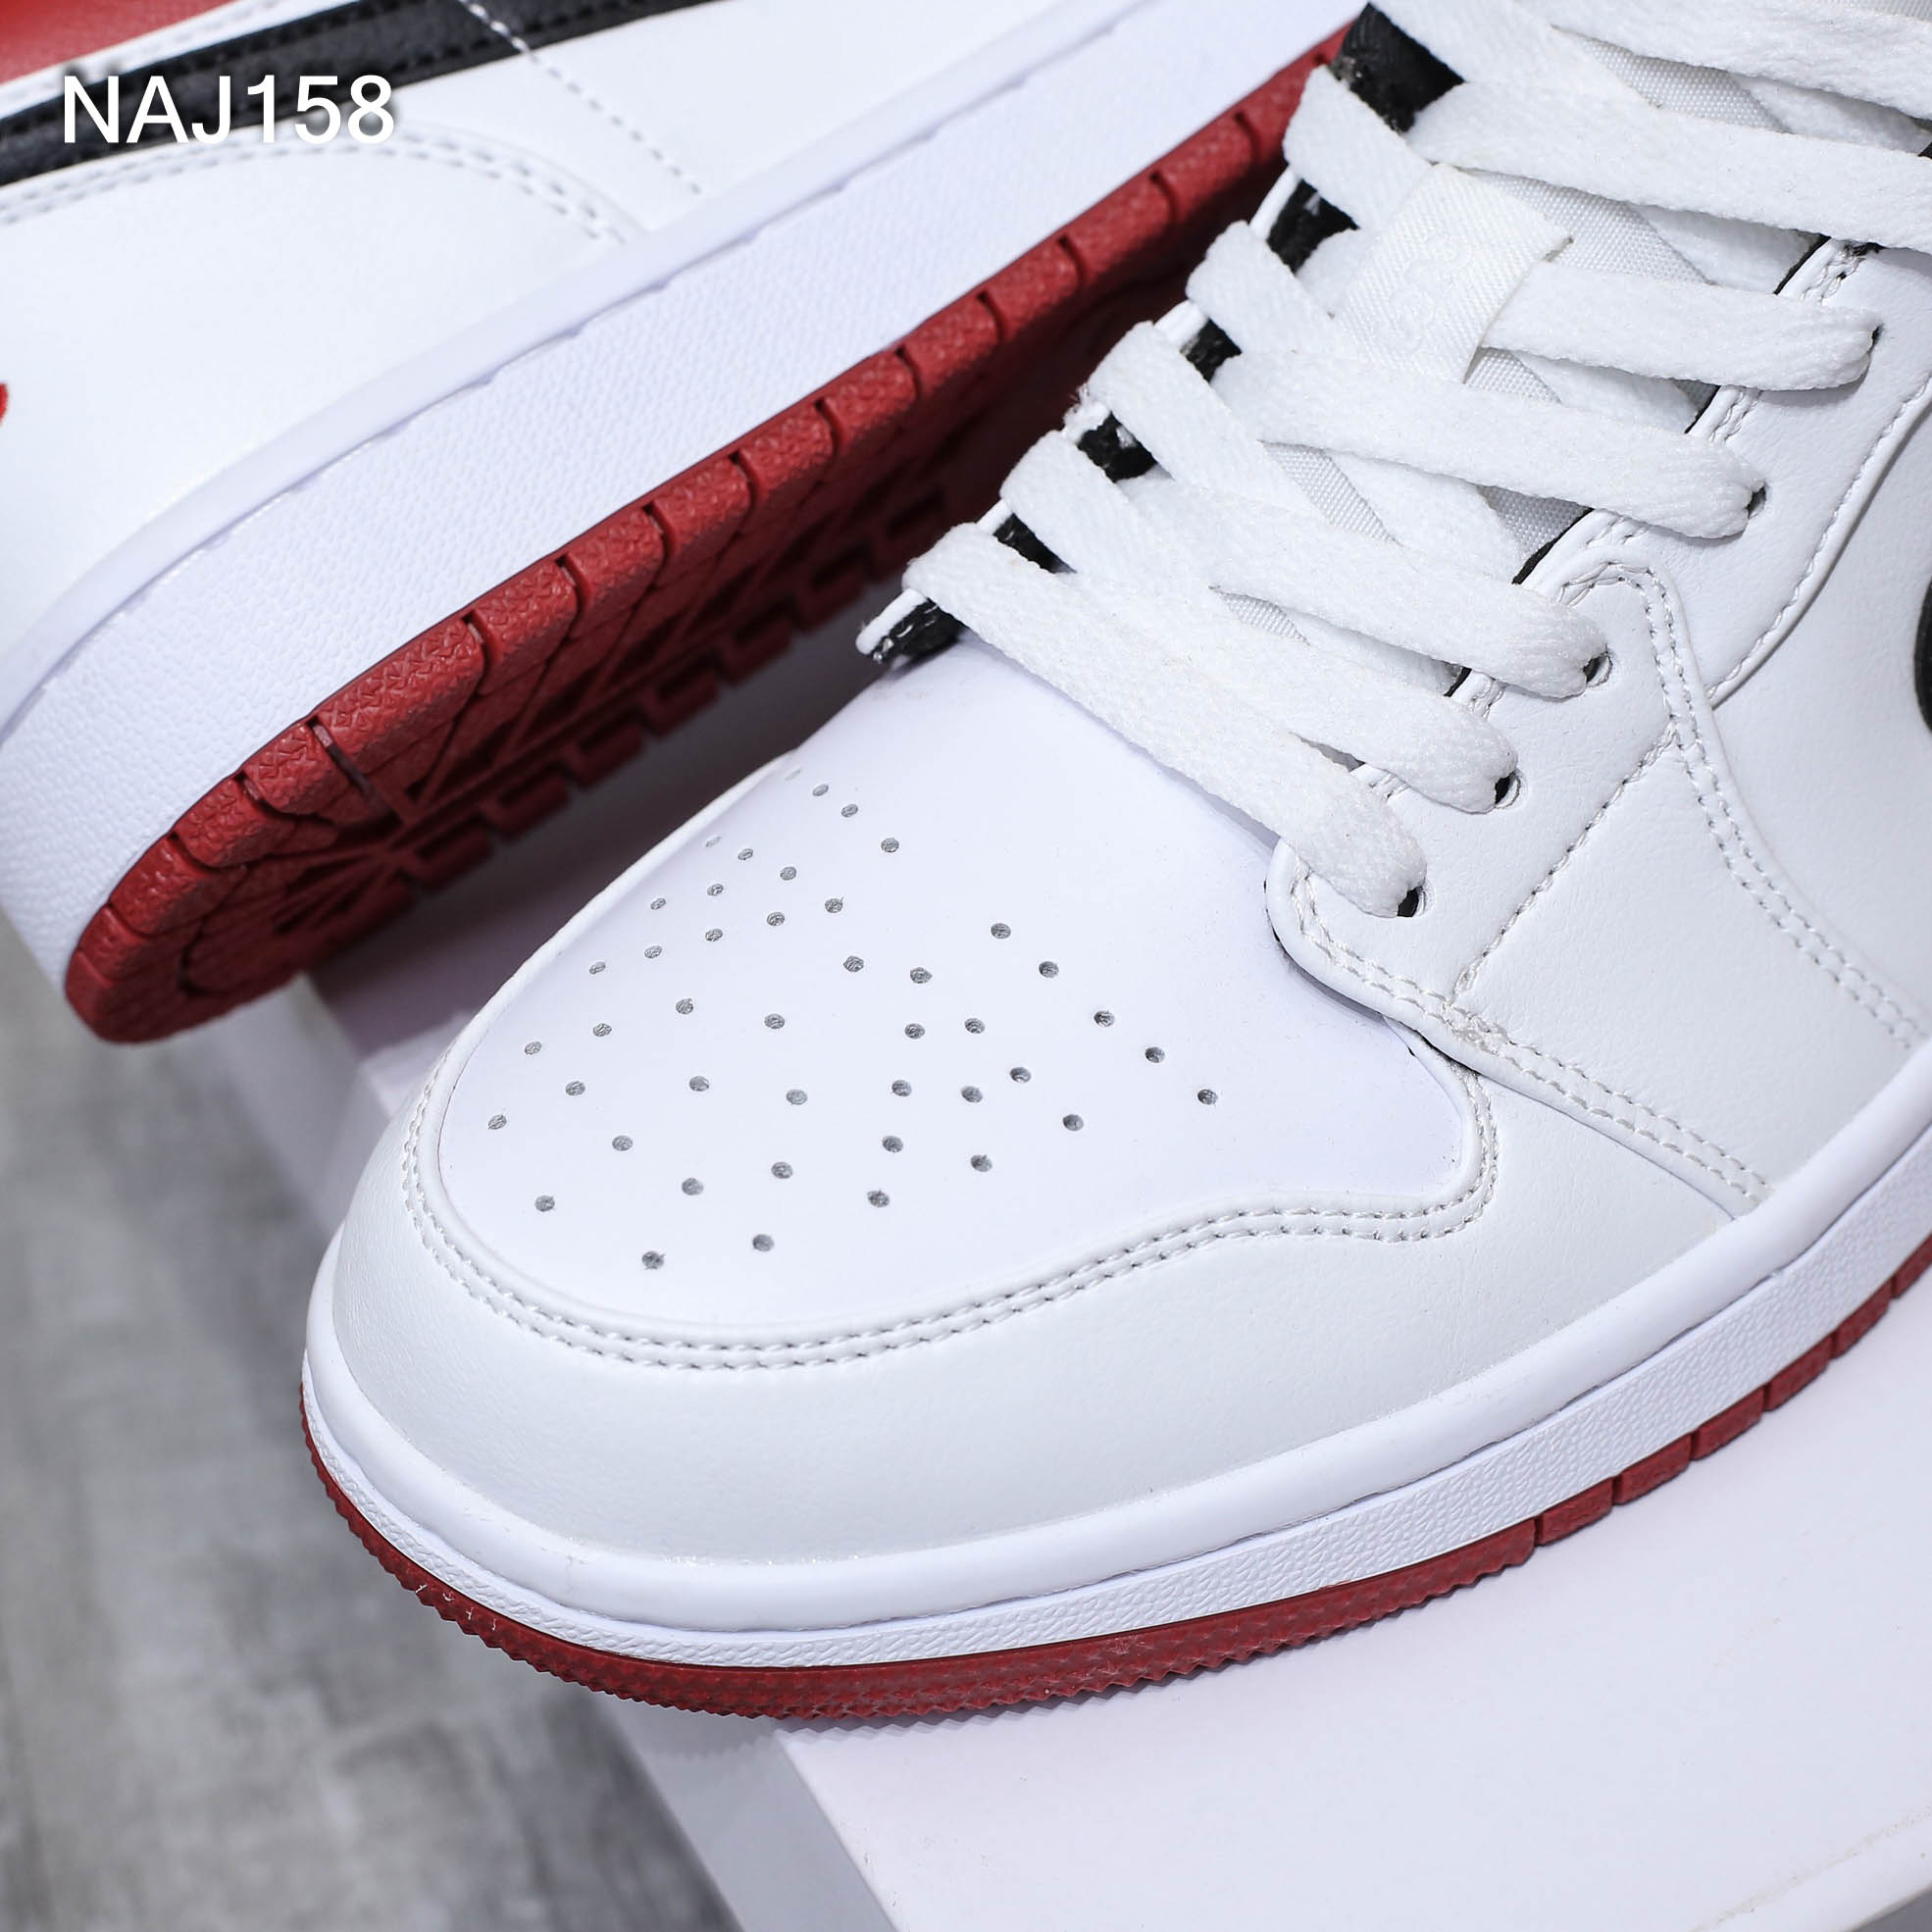 Giày Nike Air Jordan 1 Low ‘White Gym Red’ rep 1:1